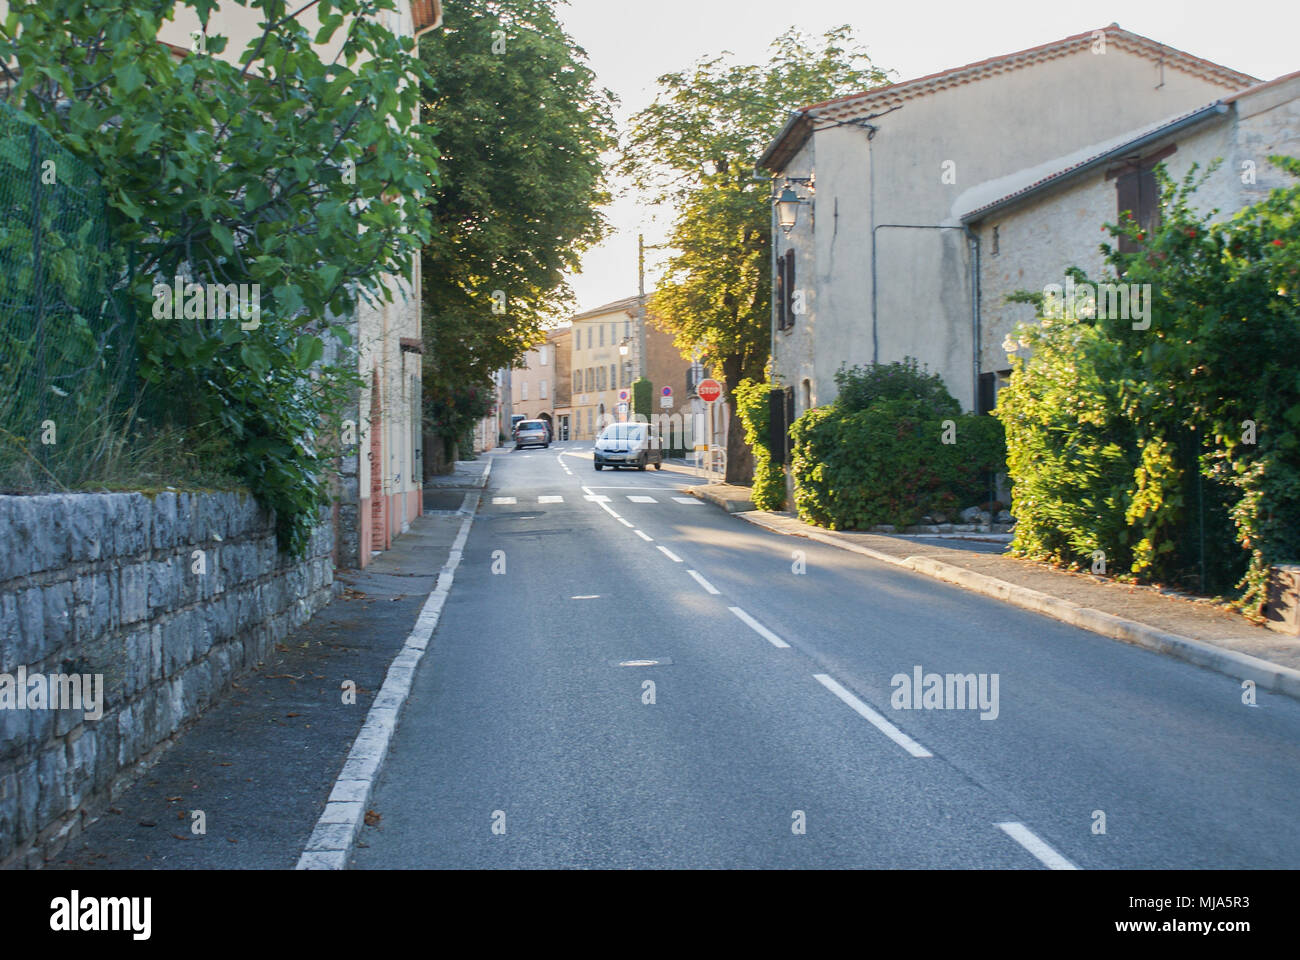 sunny street in saint cézaire sur siagne, alpes maritimes, france Stock Photo